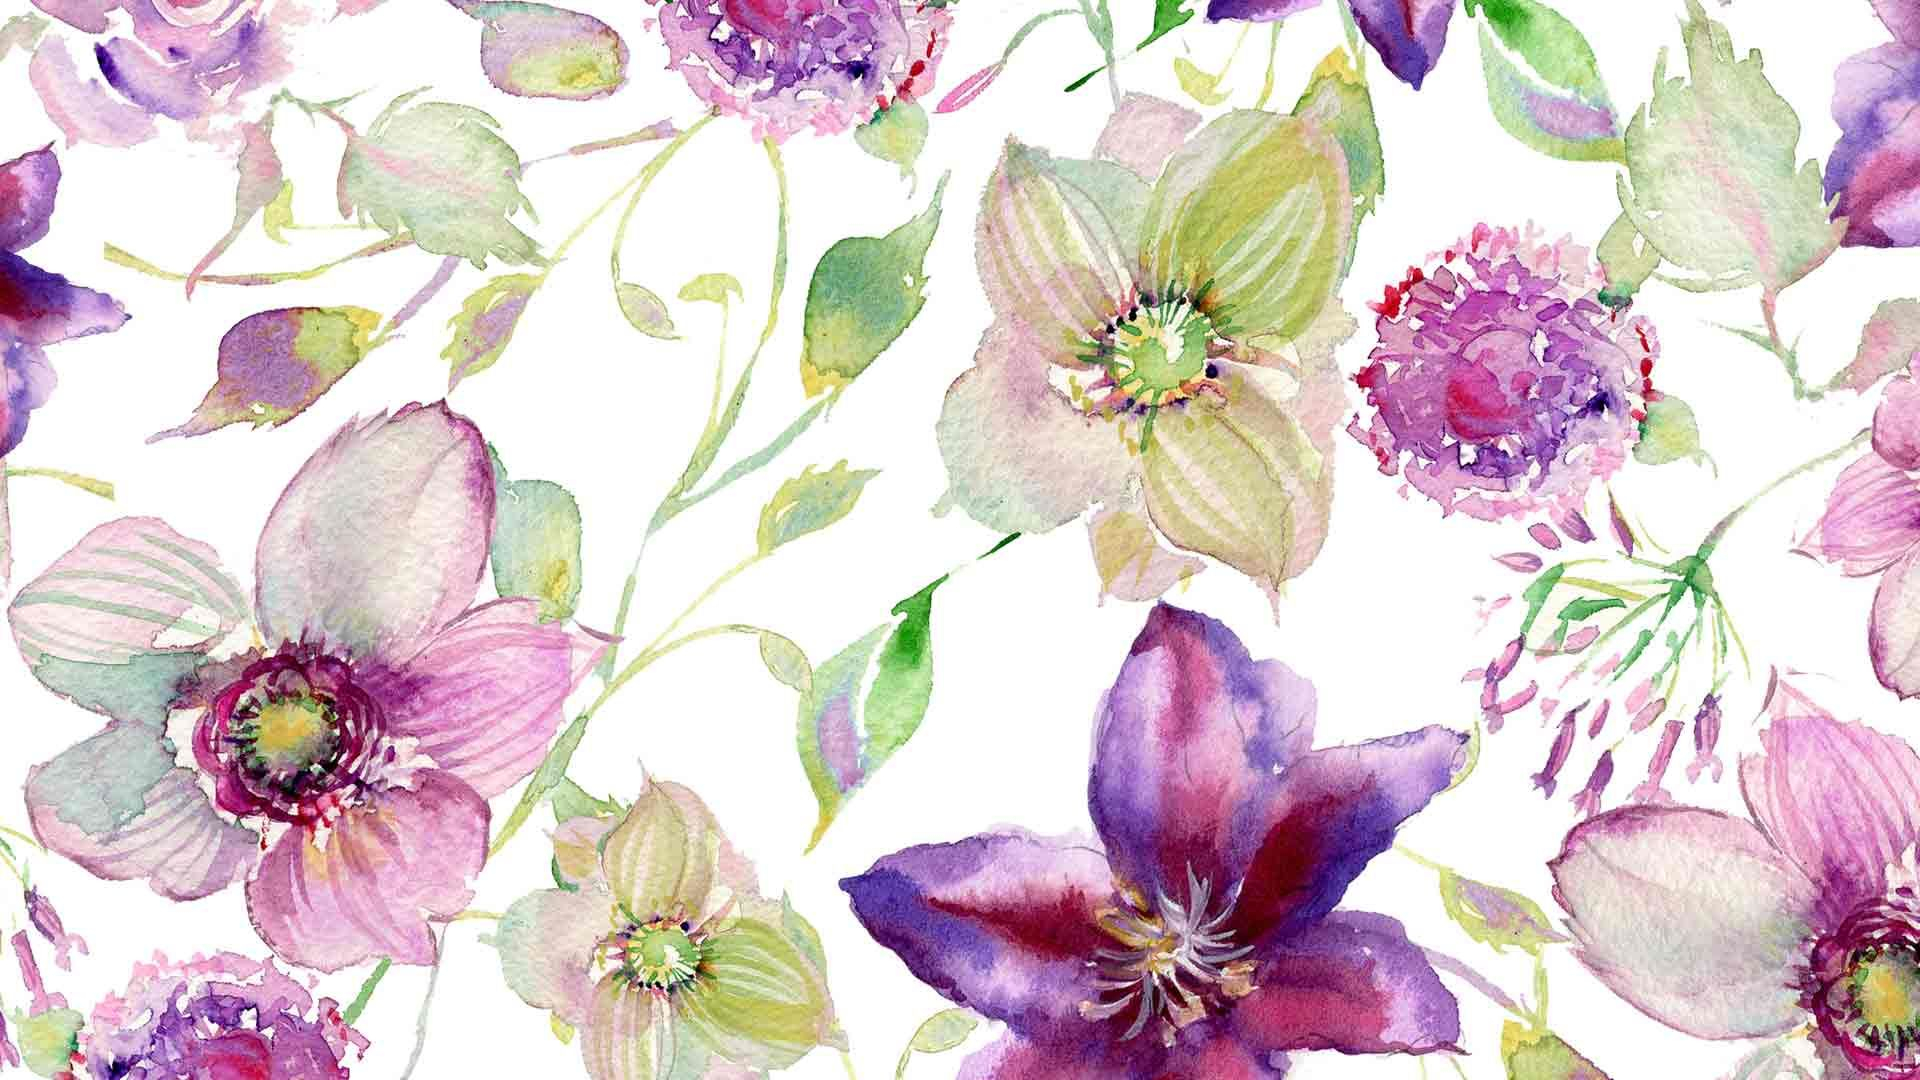 1920x1080 Watercolor Wallpaper HD | Wallpapers, Backgrounds, Images, Art Photos. | Watercolor floral wallpaper, Watercolor wallpaper, Flower wallpaper